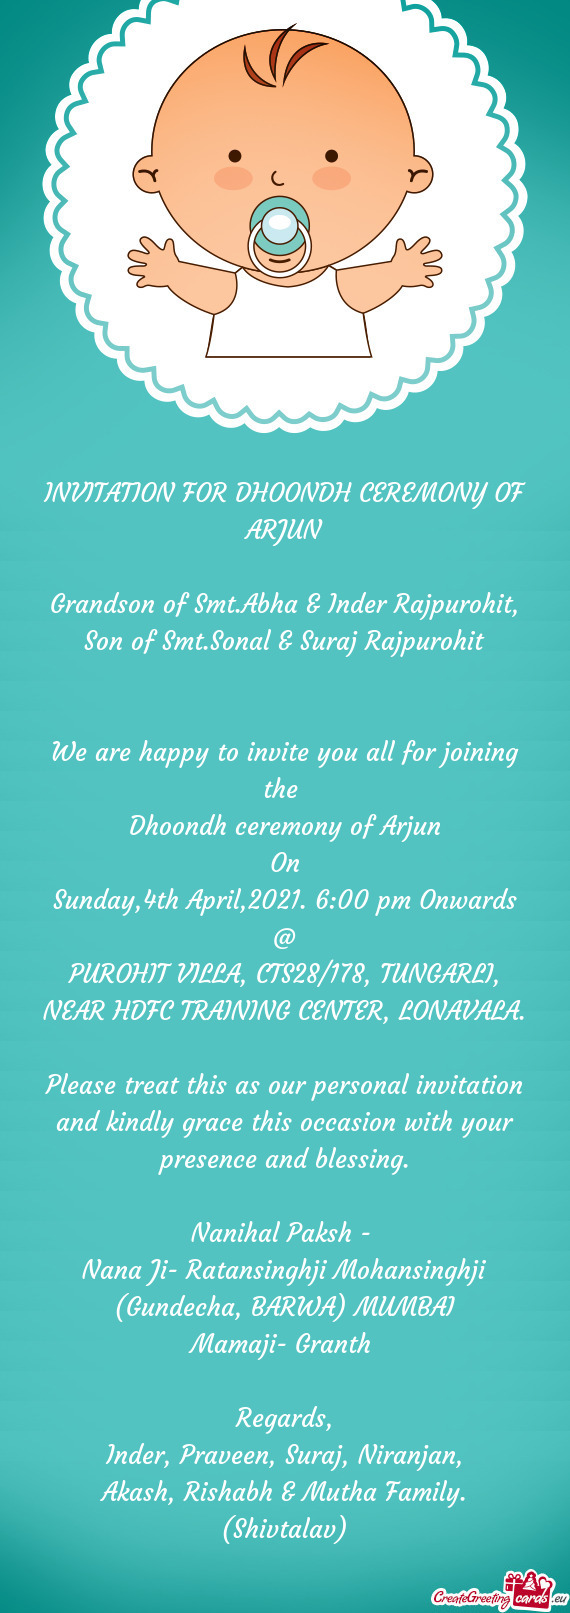 Dhoondh ceremony of Arjun